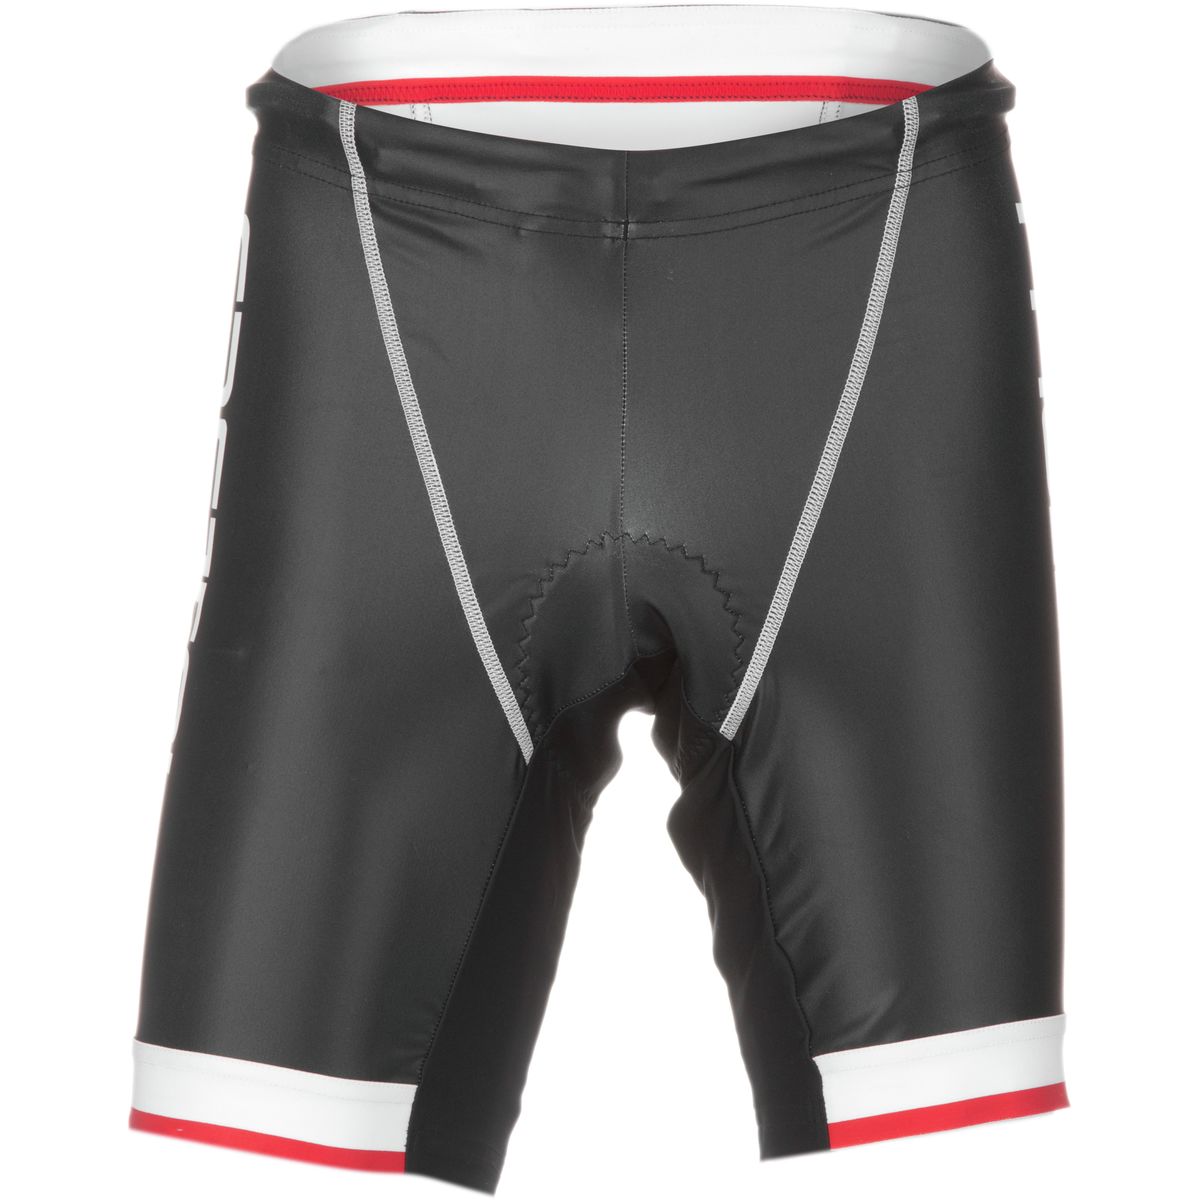 Castelli Core Tri Shorts Men's